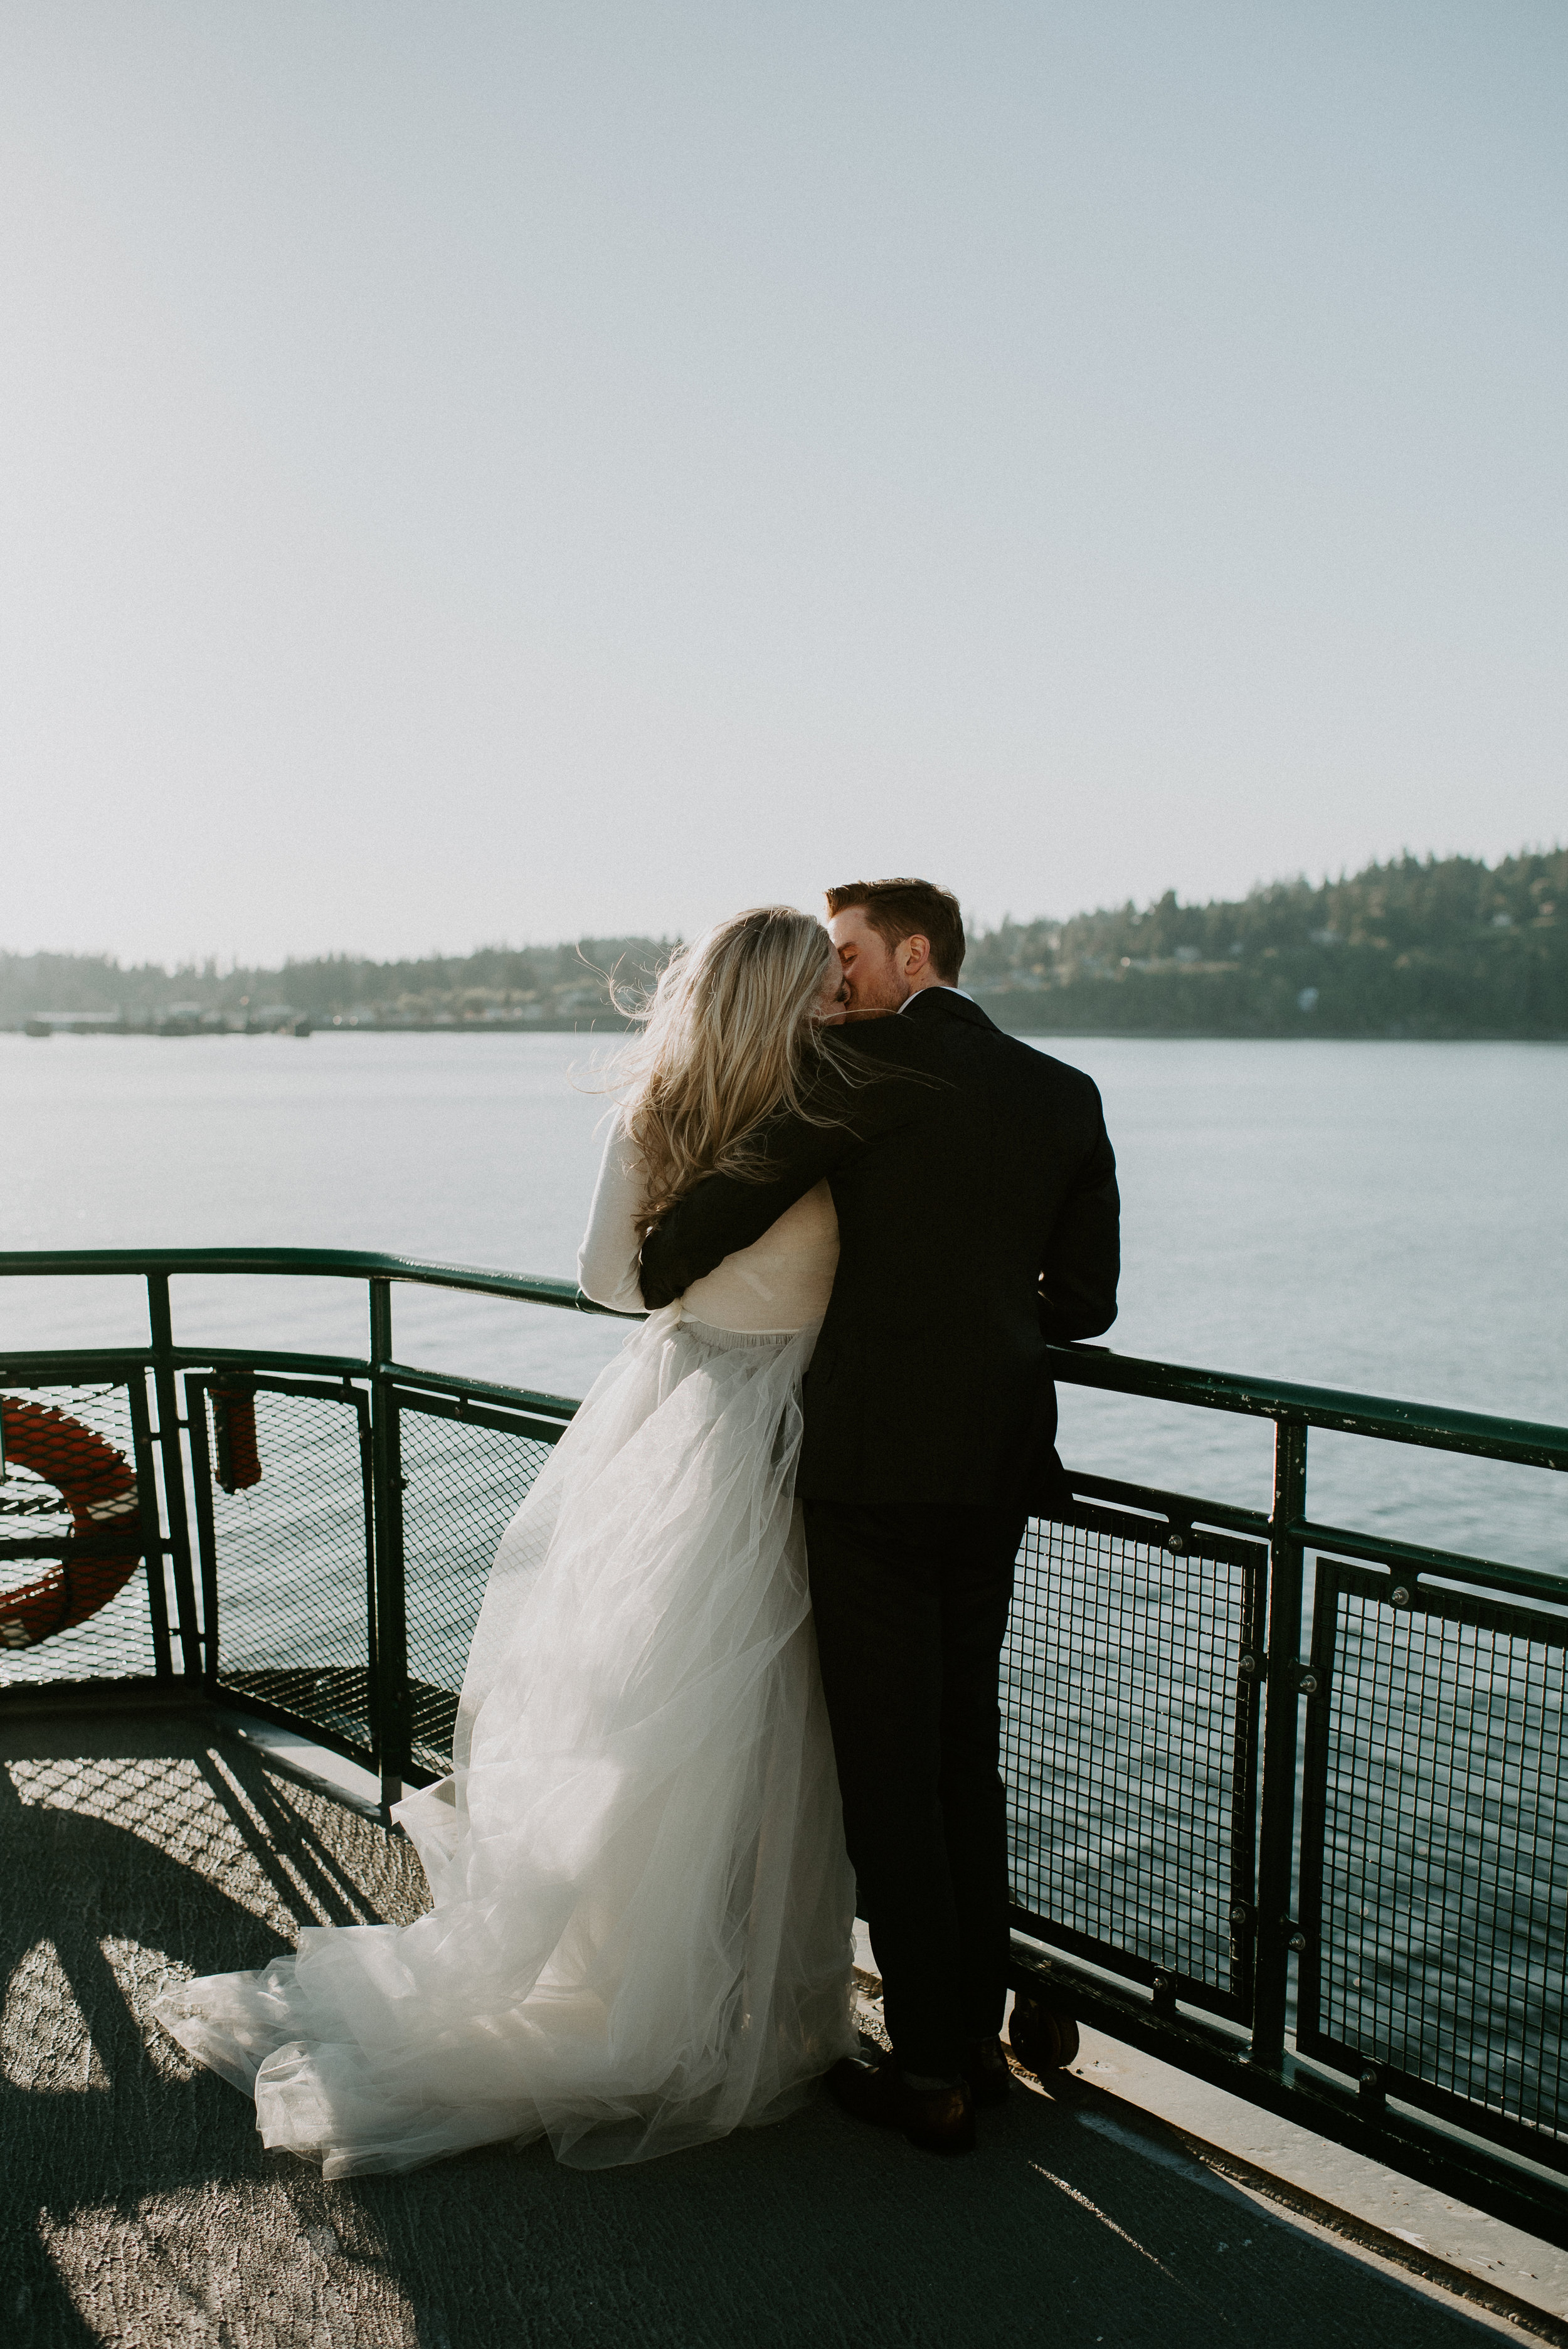 Hannah + Calvin Engagement Session - Kamra Fuller Photography - Edmonds, WA Ferry to Kingston, WA - Seattle Wedding Photographer 